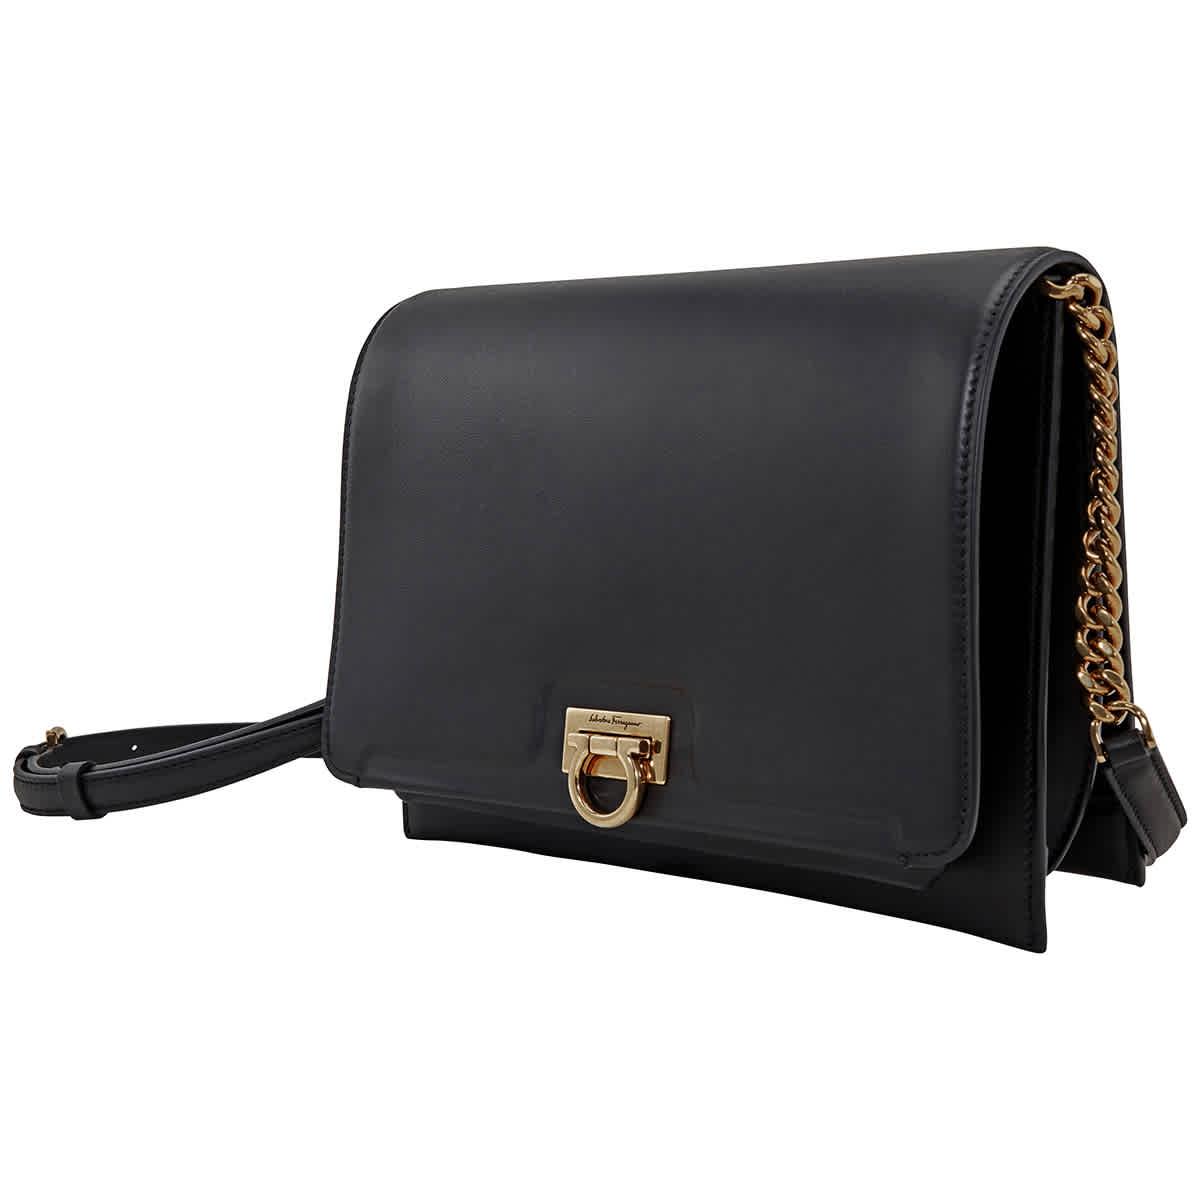 Ferragamo Trifolio Flap Medium Leather Shoulder Bag in Nero/Gold (Black) -  Save 63% | Lyst